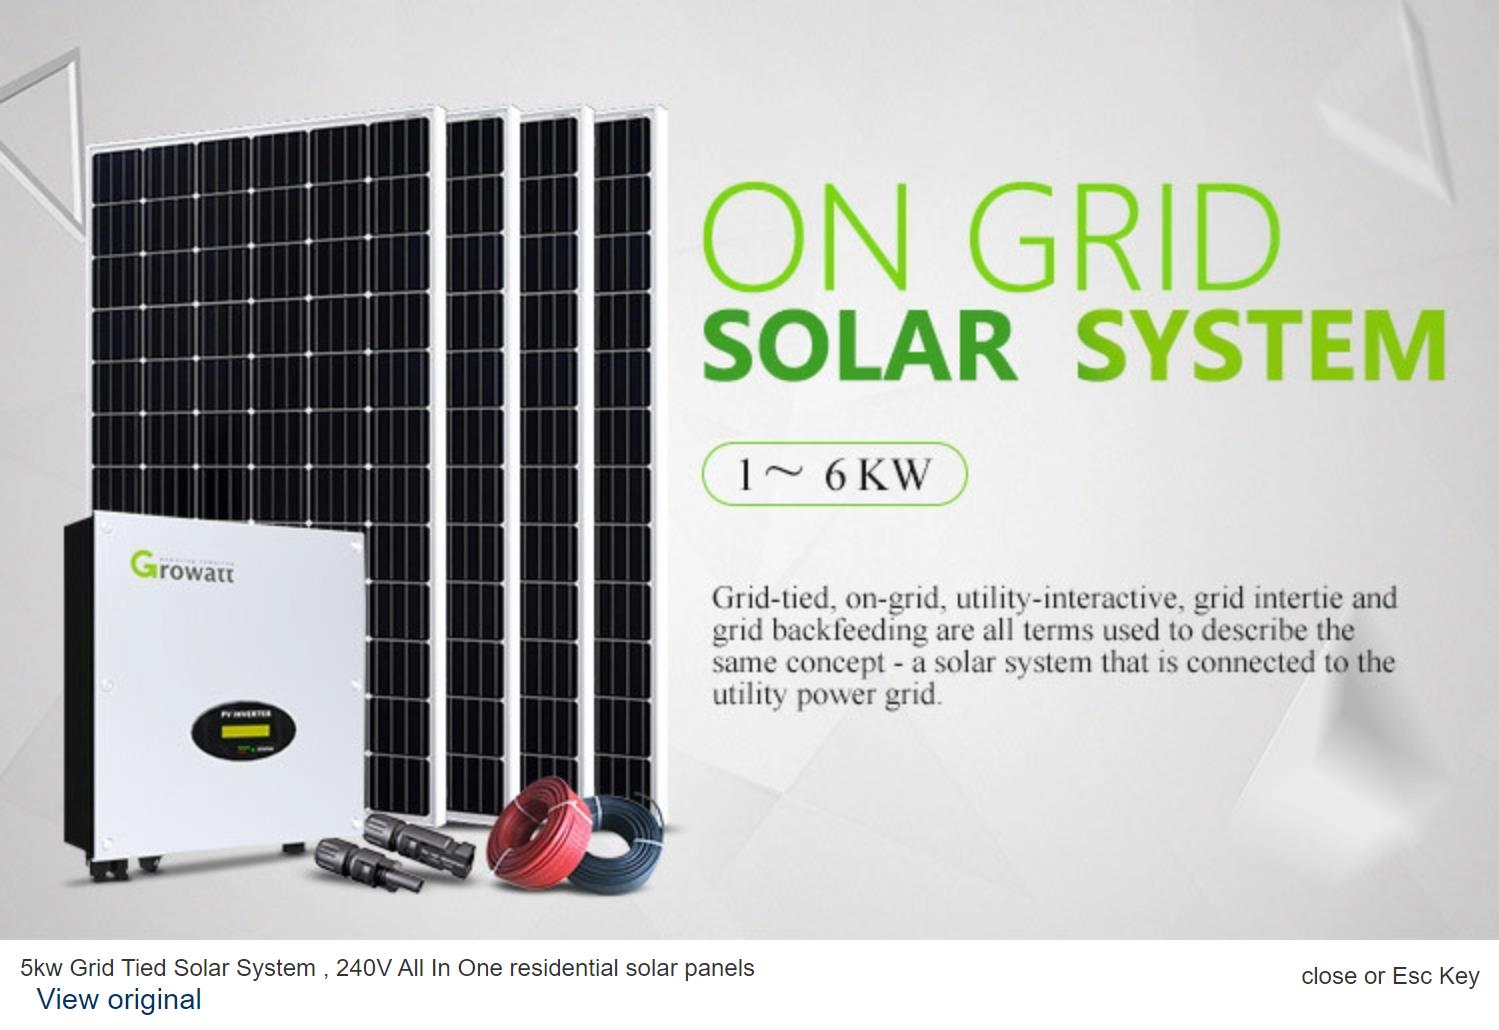 5kw并网太阳能系统，240V多合一住宅太阳能电池板